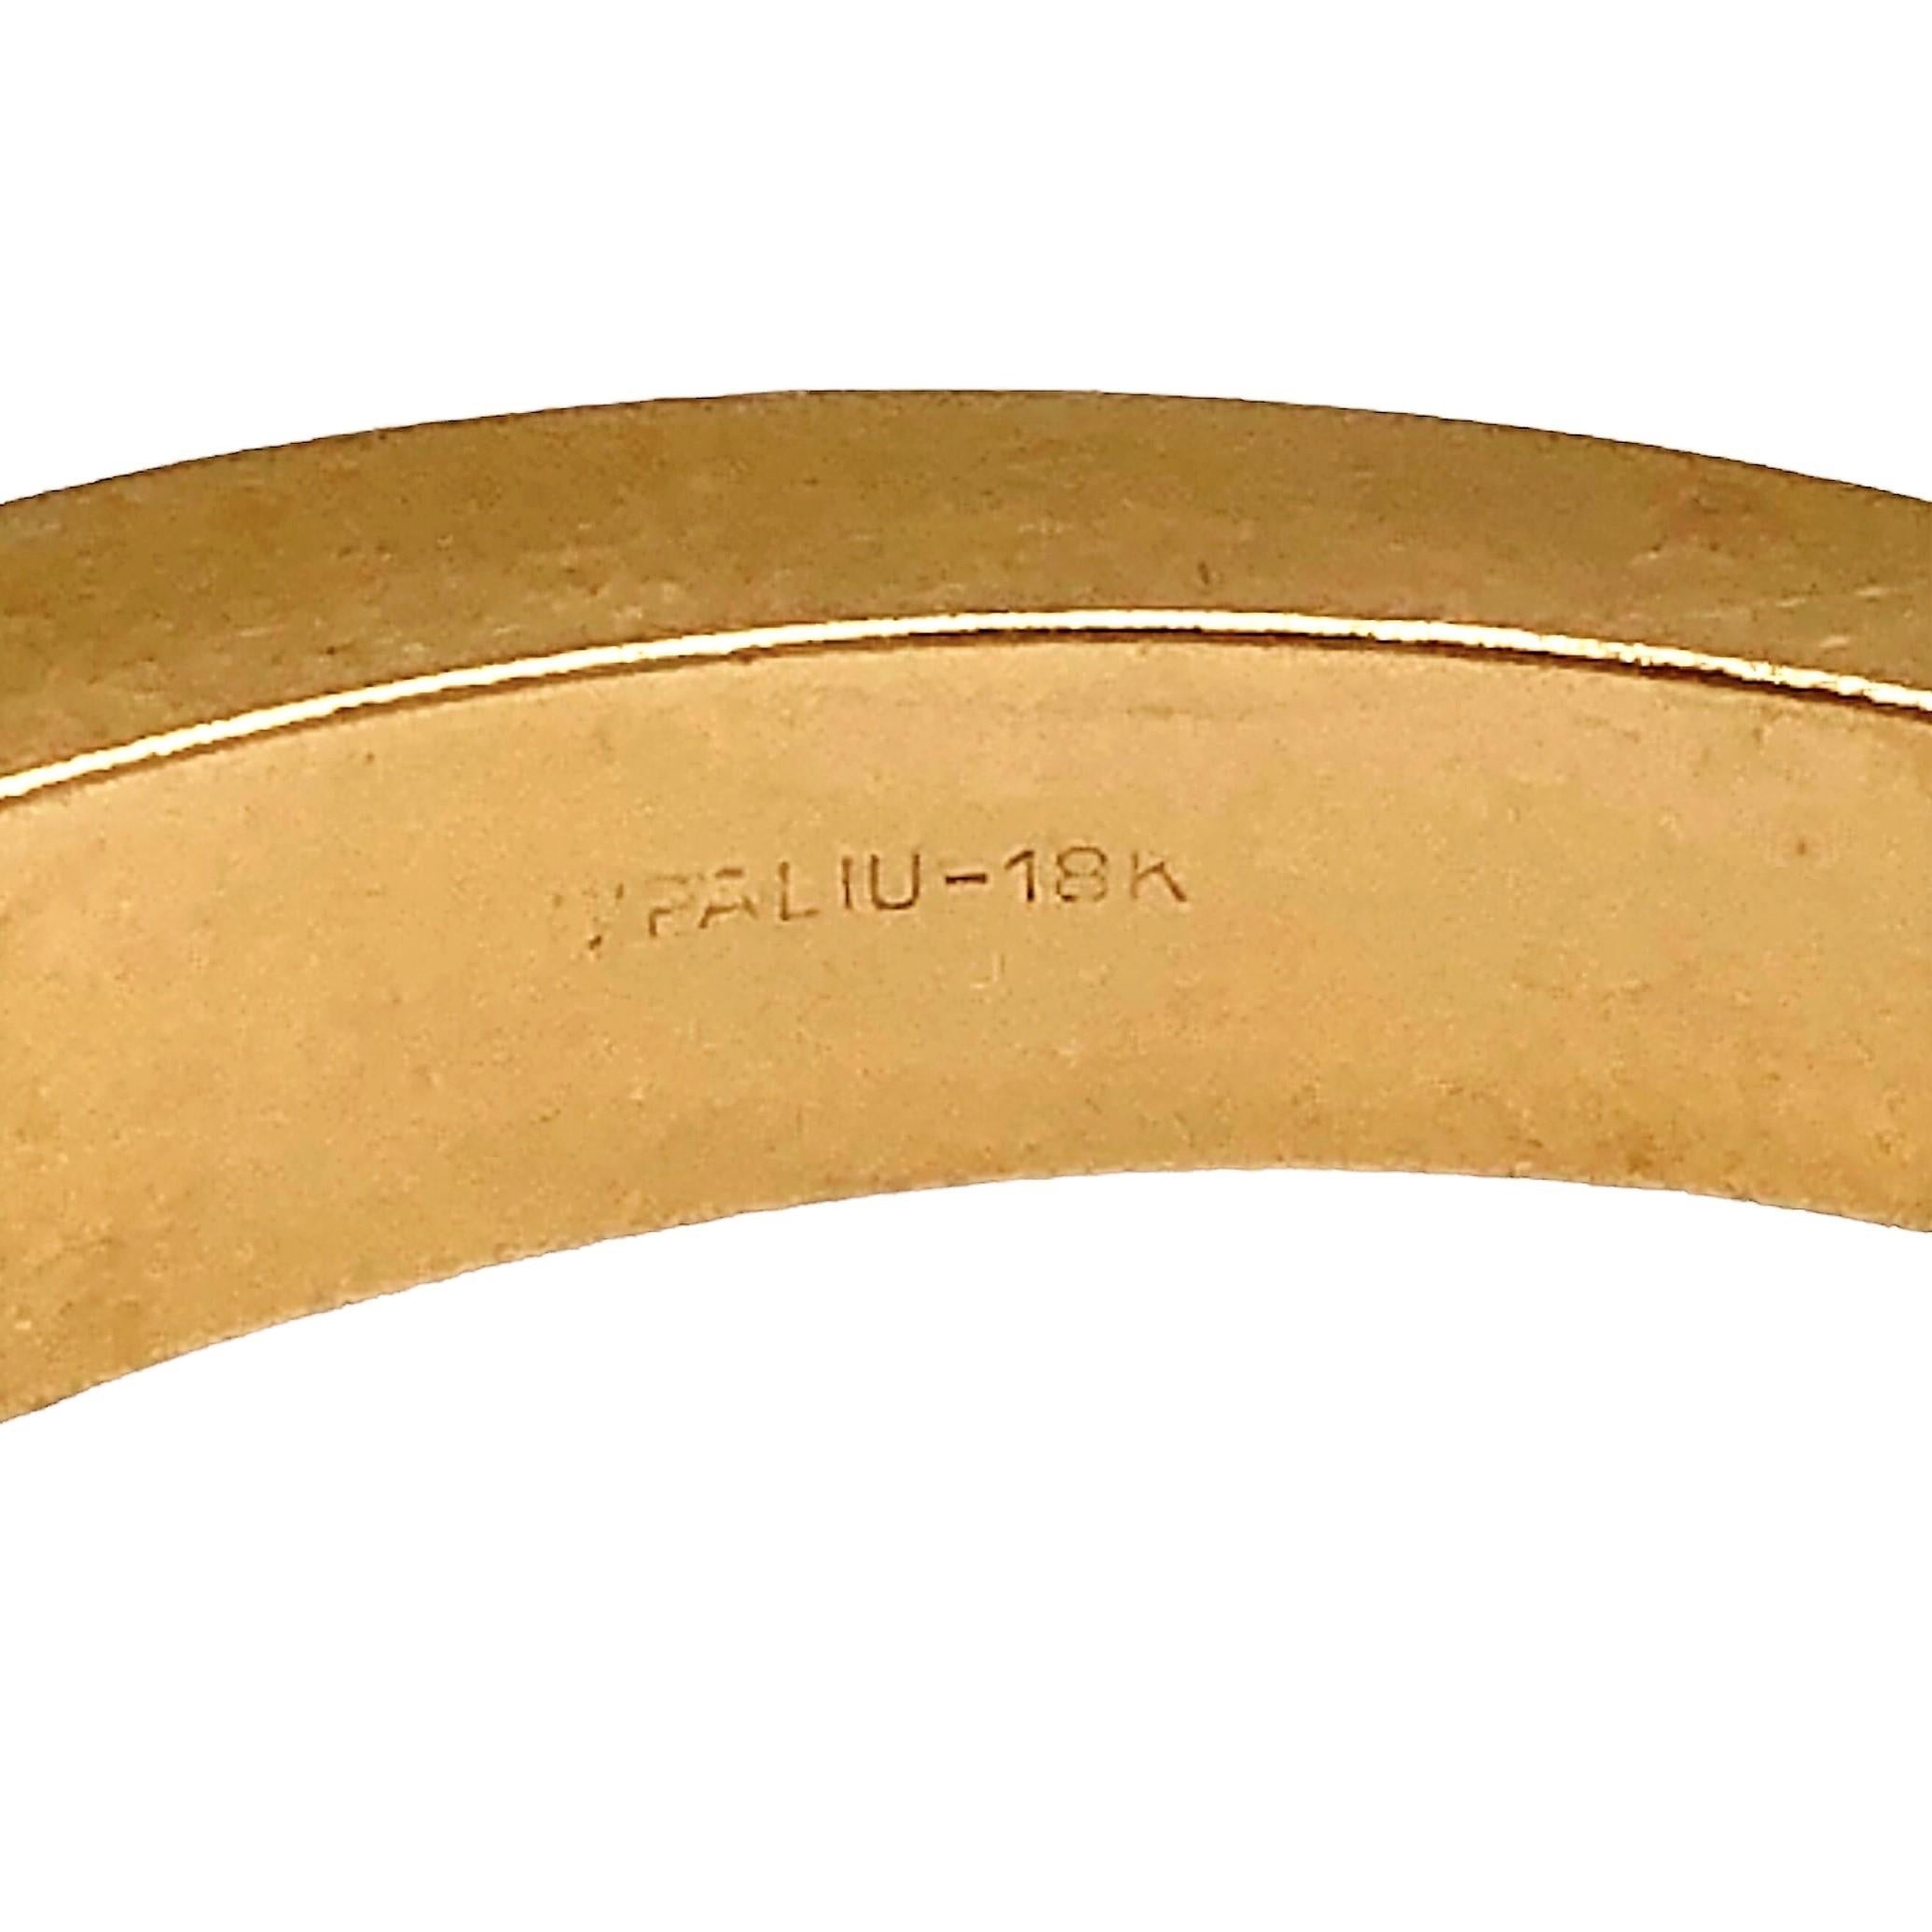 Modernist 18k Yellow Gold and Malachite Bangle Bracelet by Designer S'Paliu 2